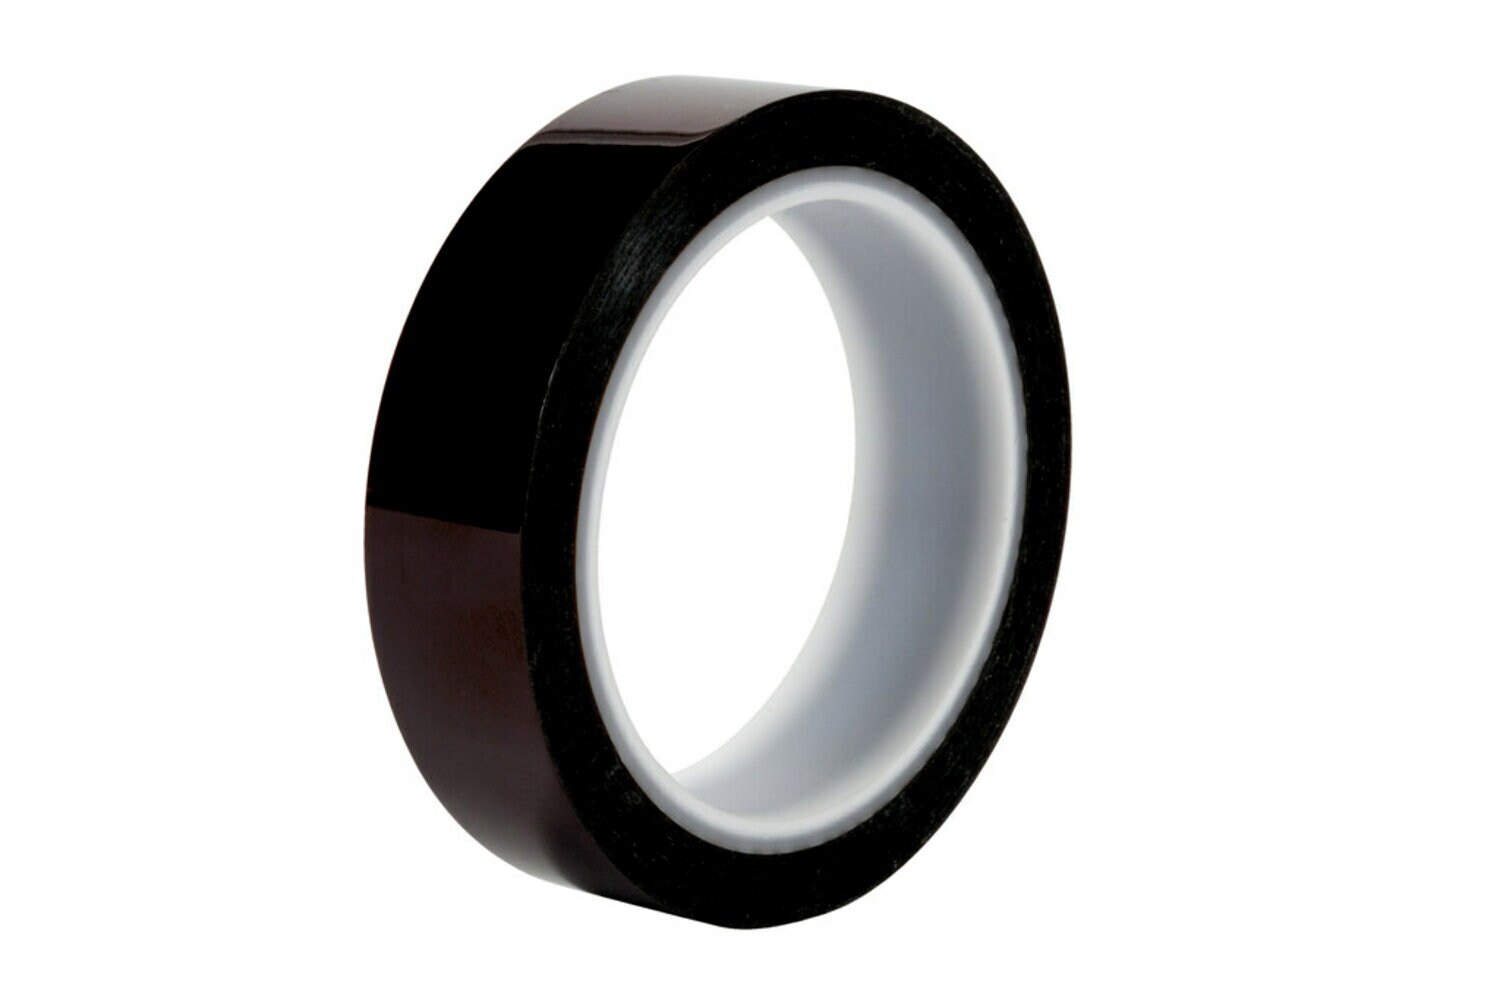 7100059597 - 3M Polyimide Tape 8998, Dark Amber, 3/4 in x 36 yd, 3.3 mil, 48 rolls
per case